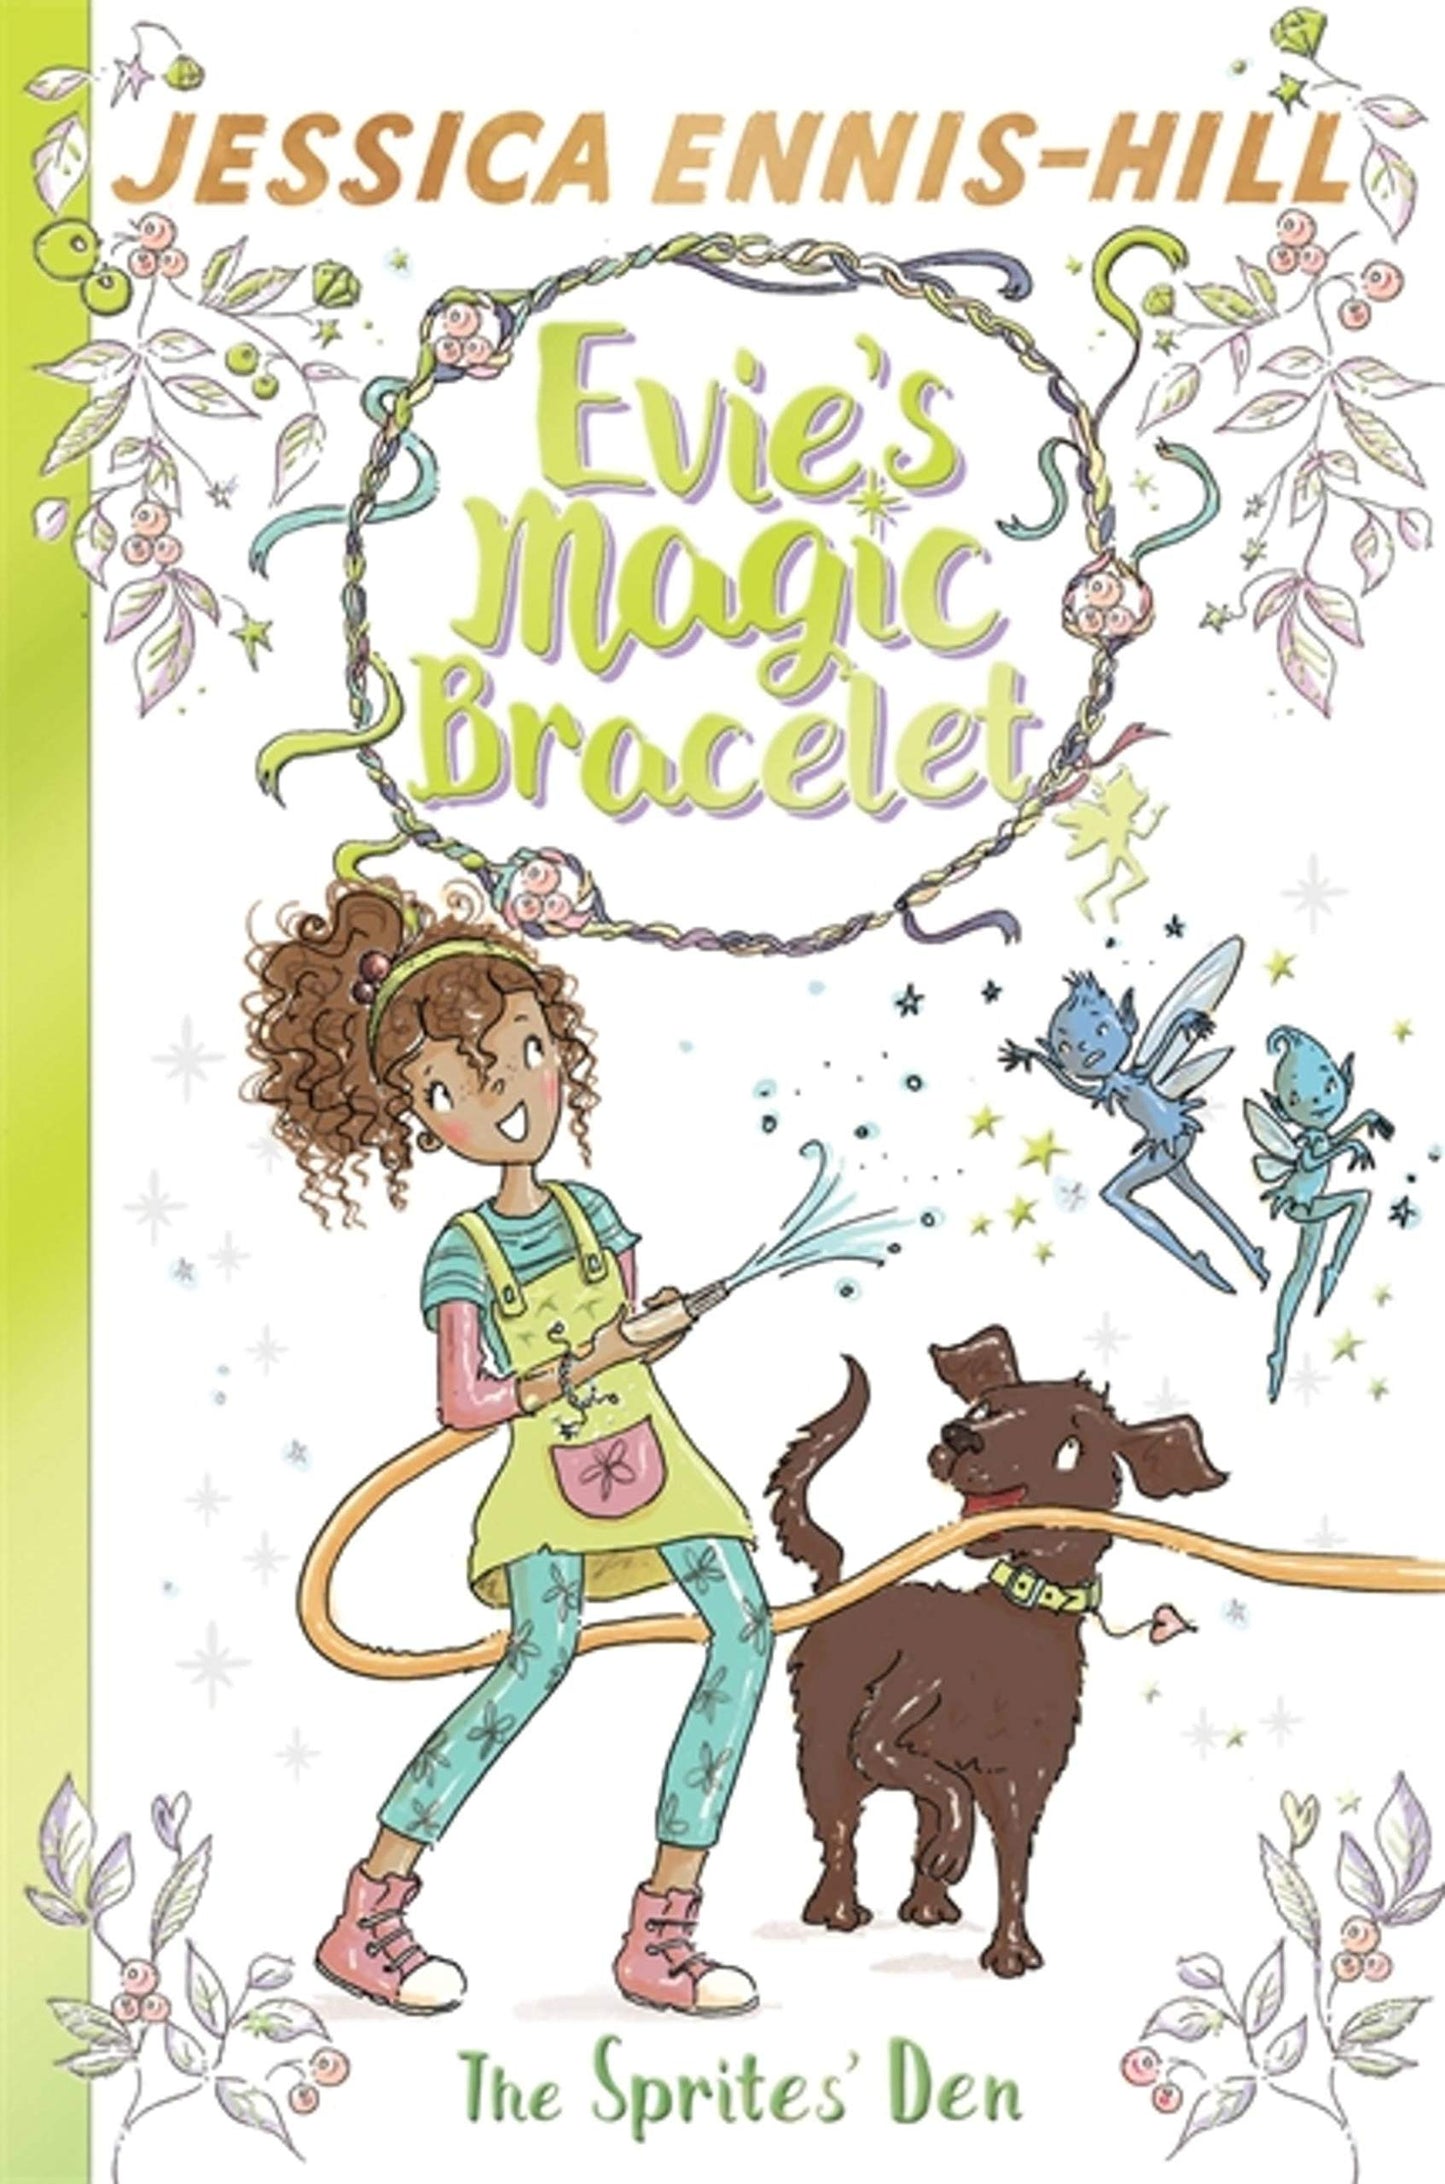 Evie’s Magic Bracelet by Jessica Ennis-Hill